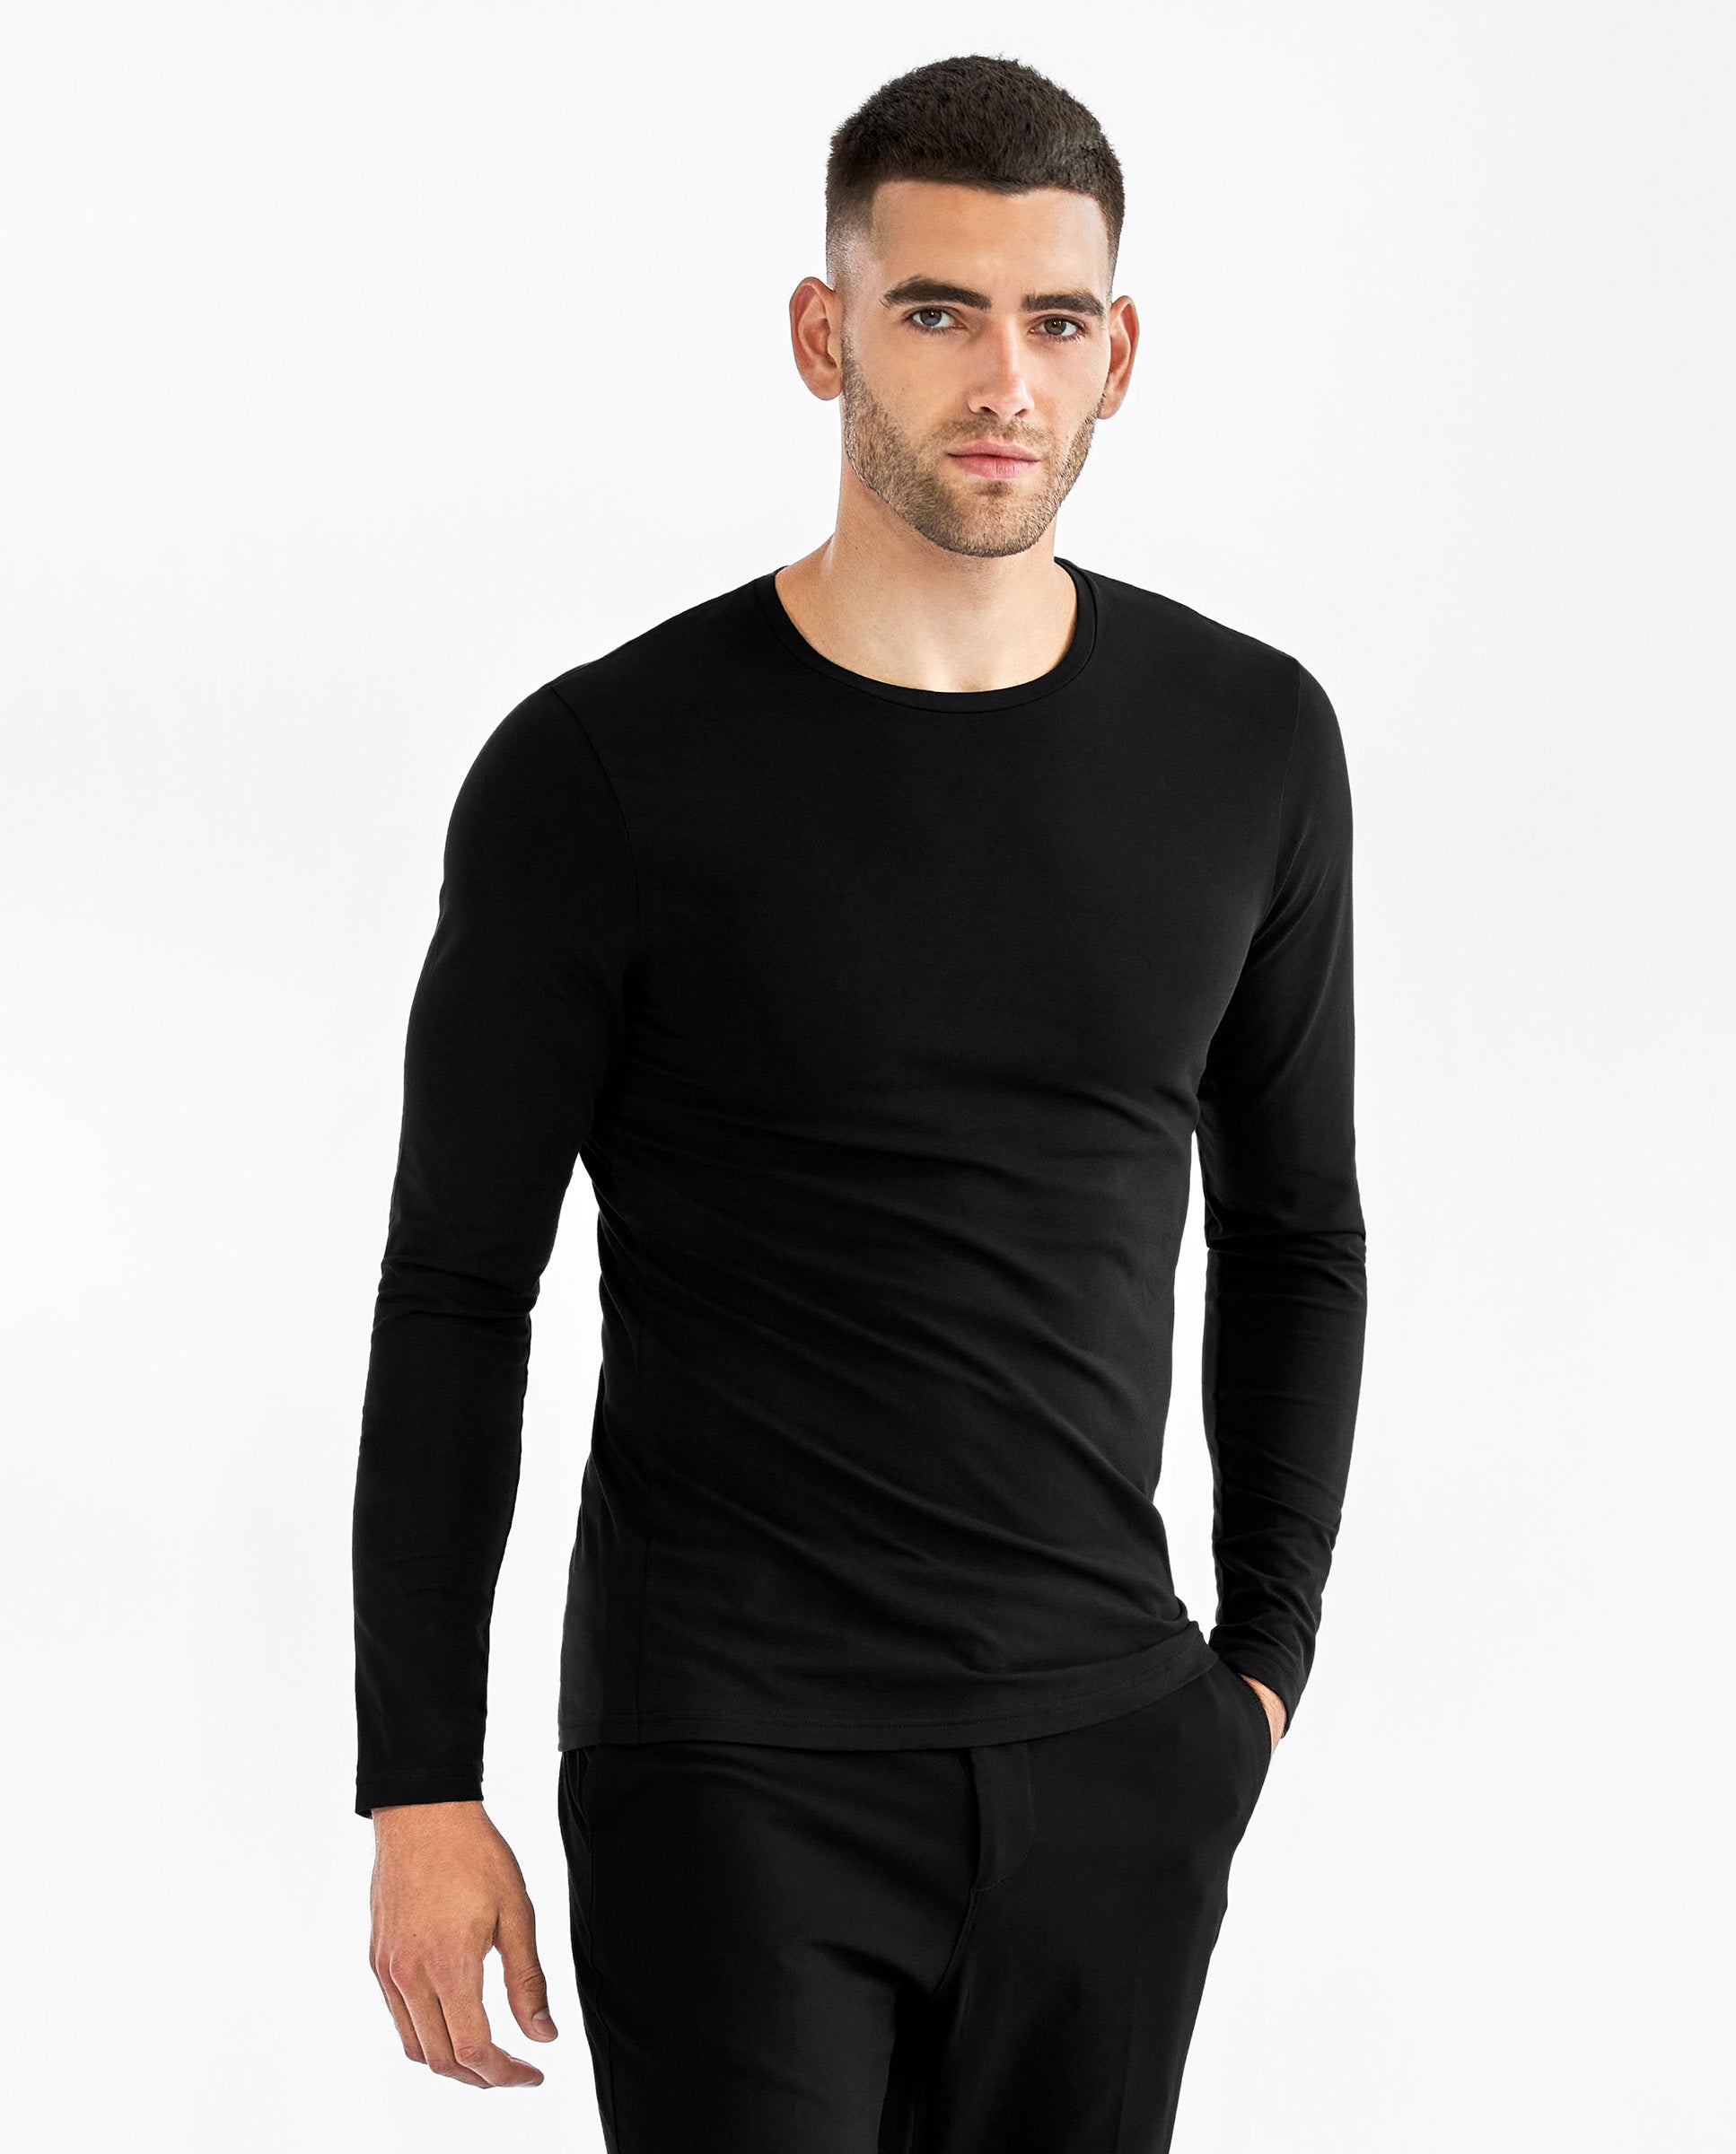 Camiseta cuello caja manga larga algodón negra – 90116-0002 | MIRTO